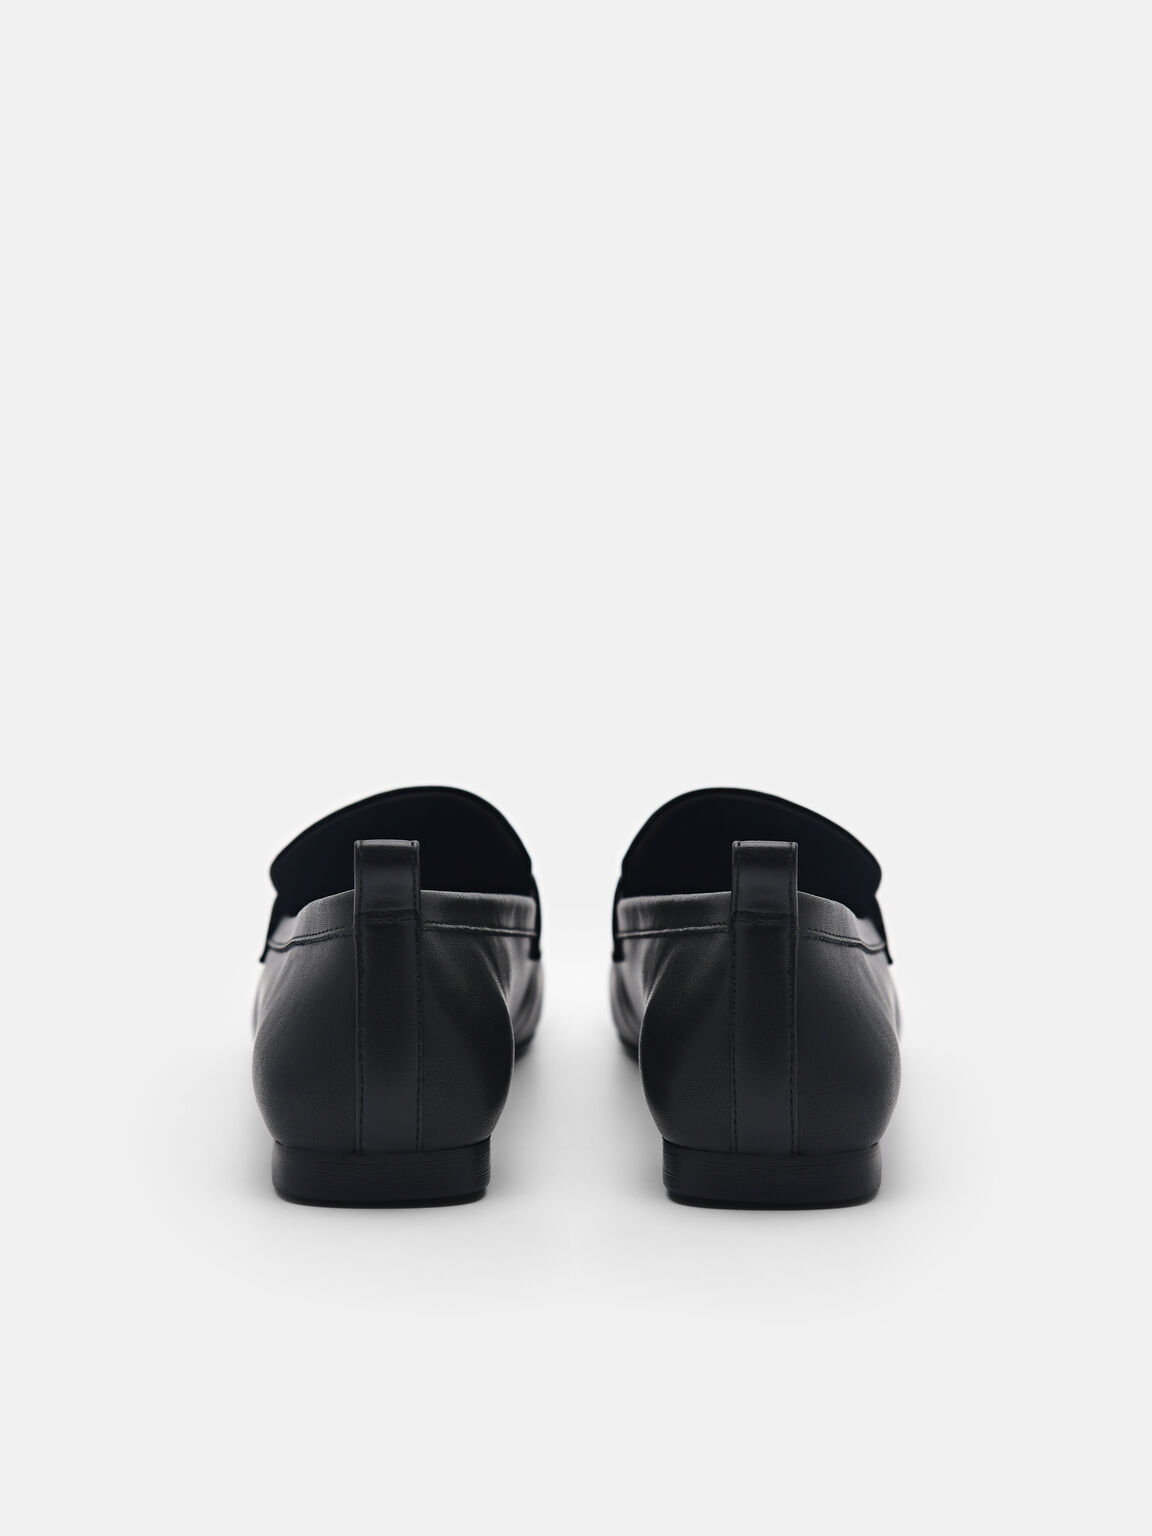 Eden Leather Loafers, Black